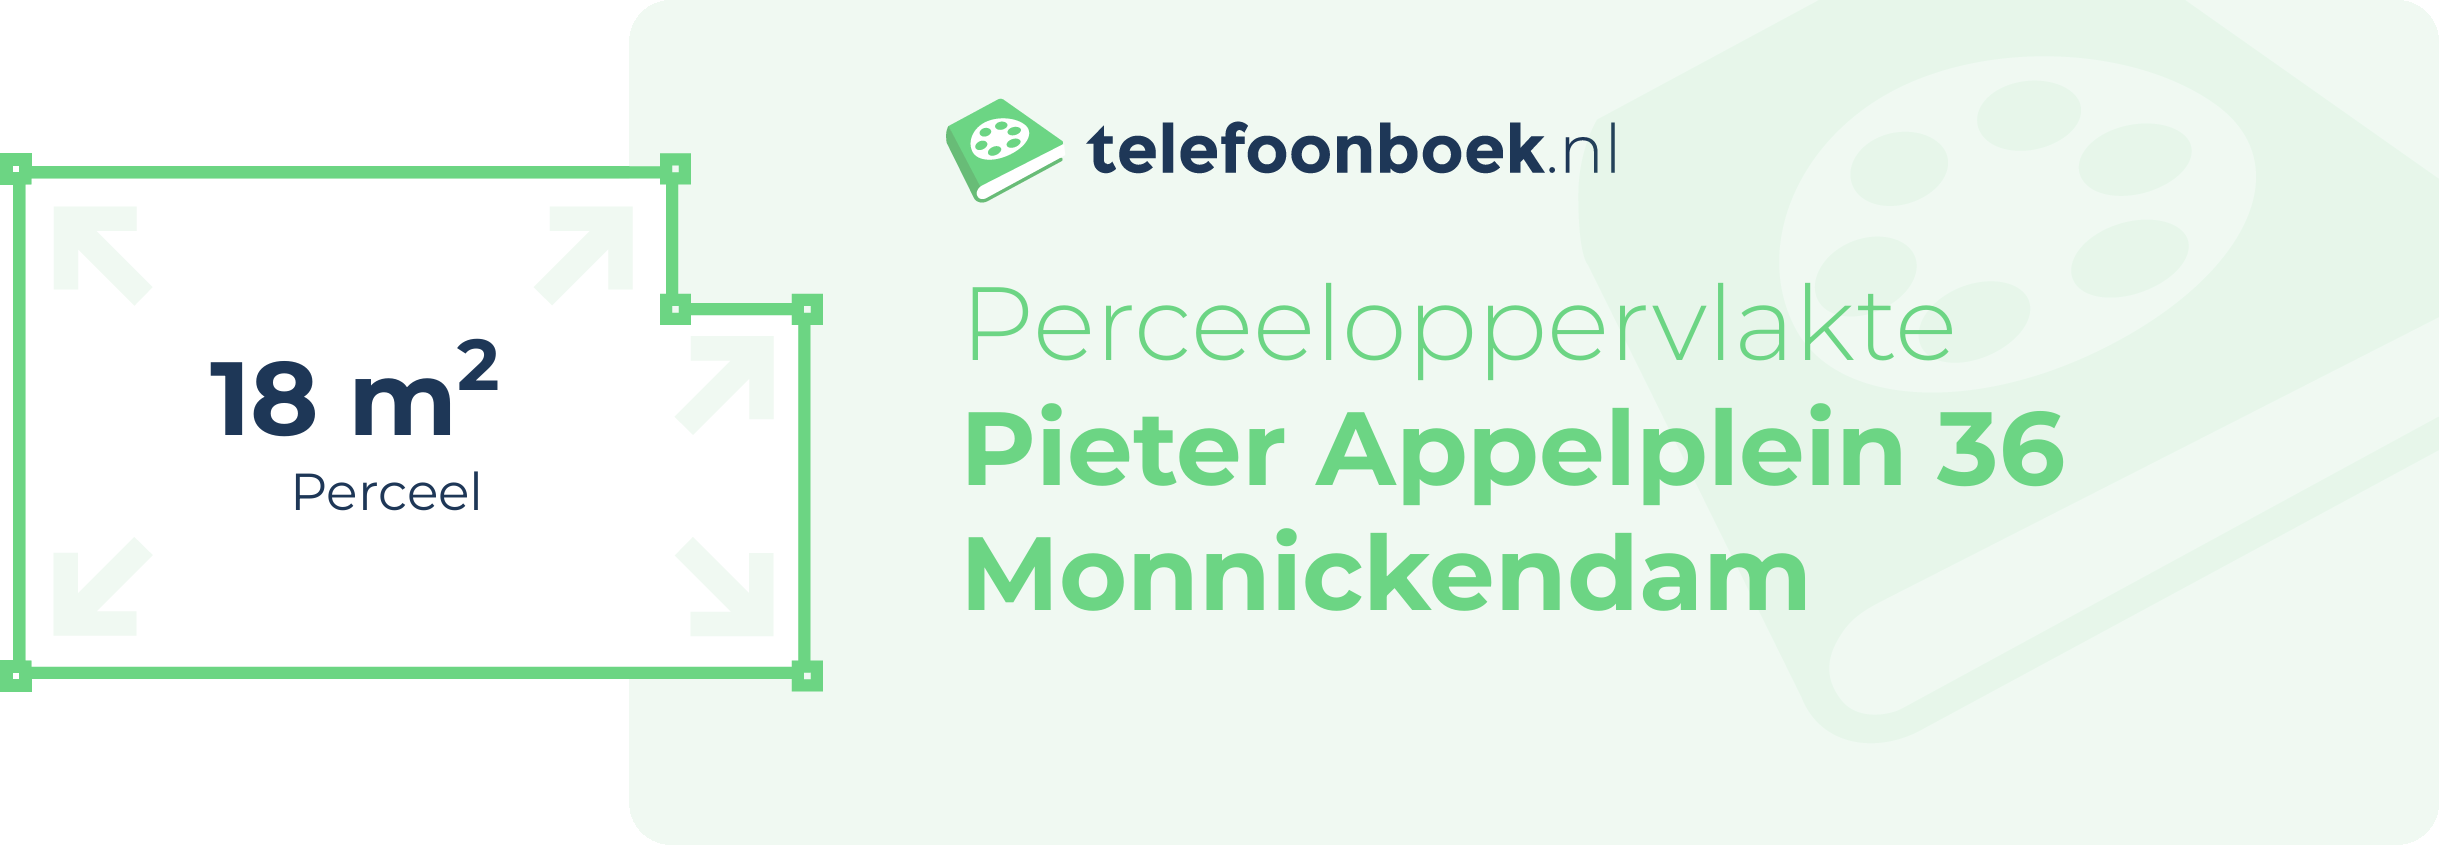 Perceeloppervlakte Pieter Appelplein 36 Monnickendam